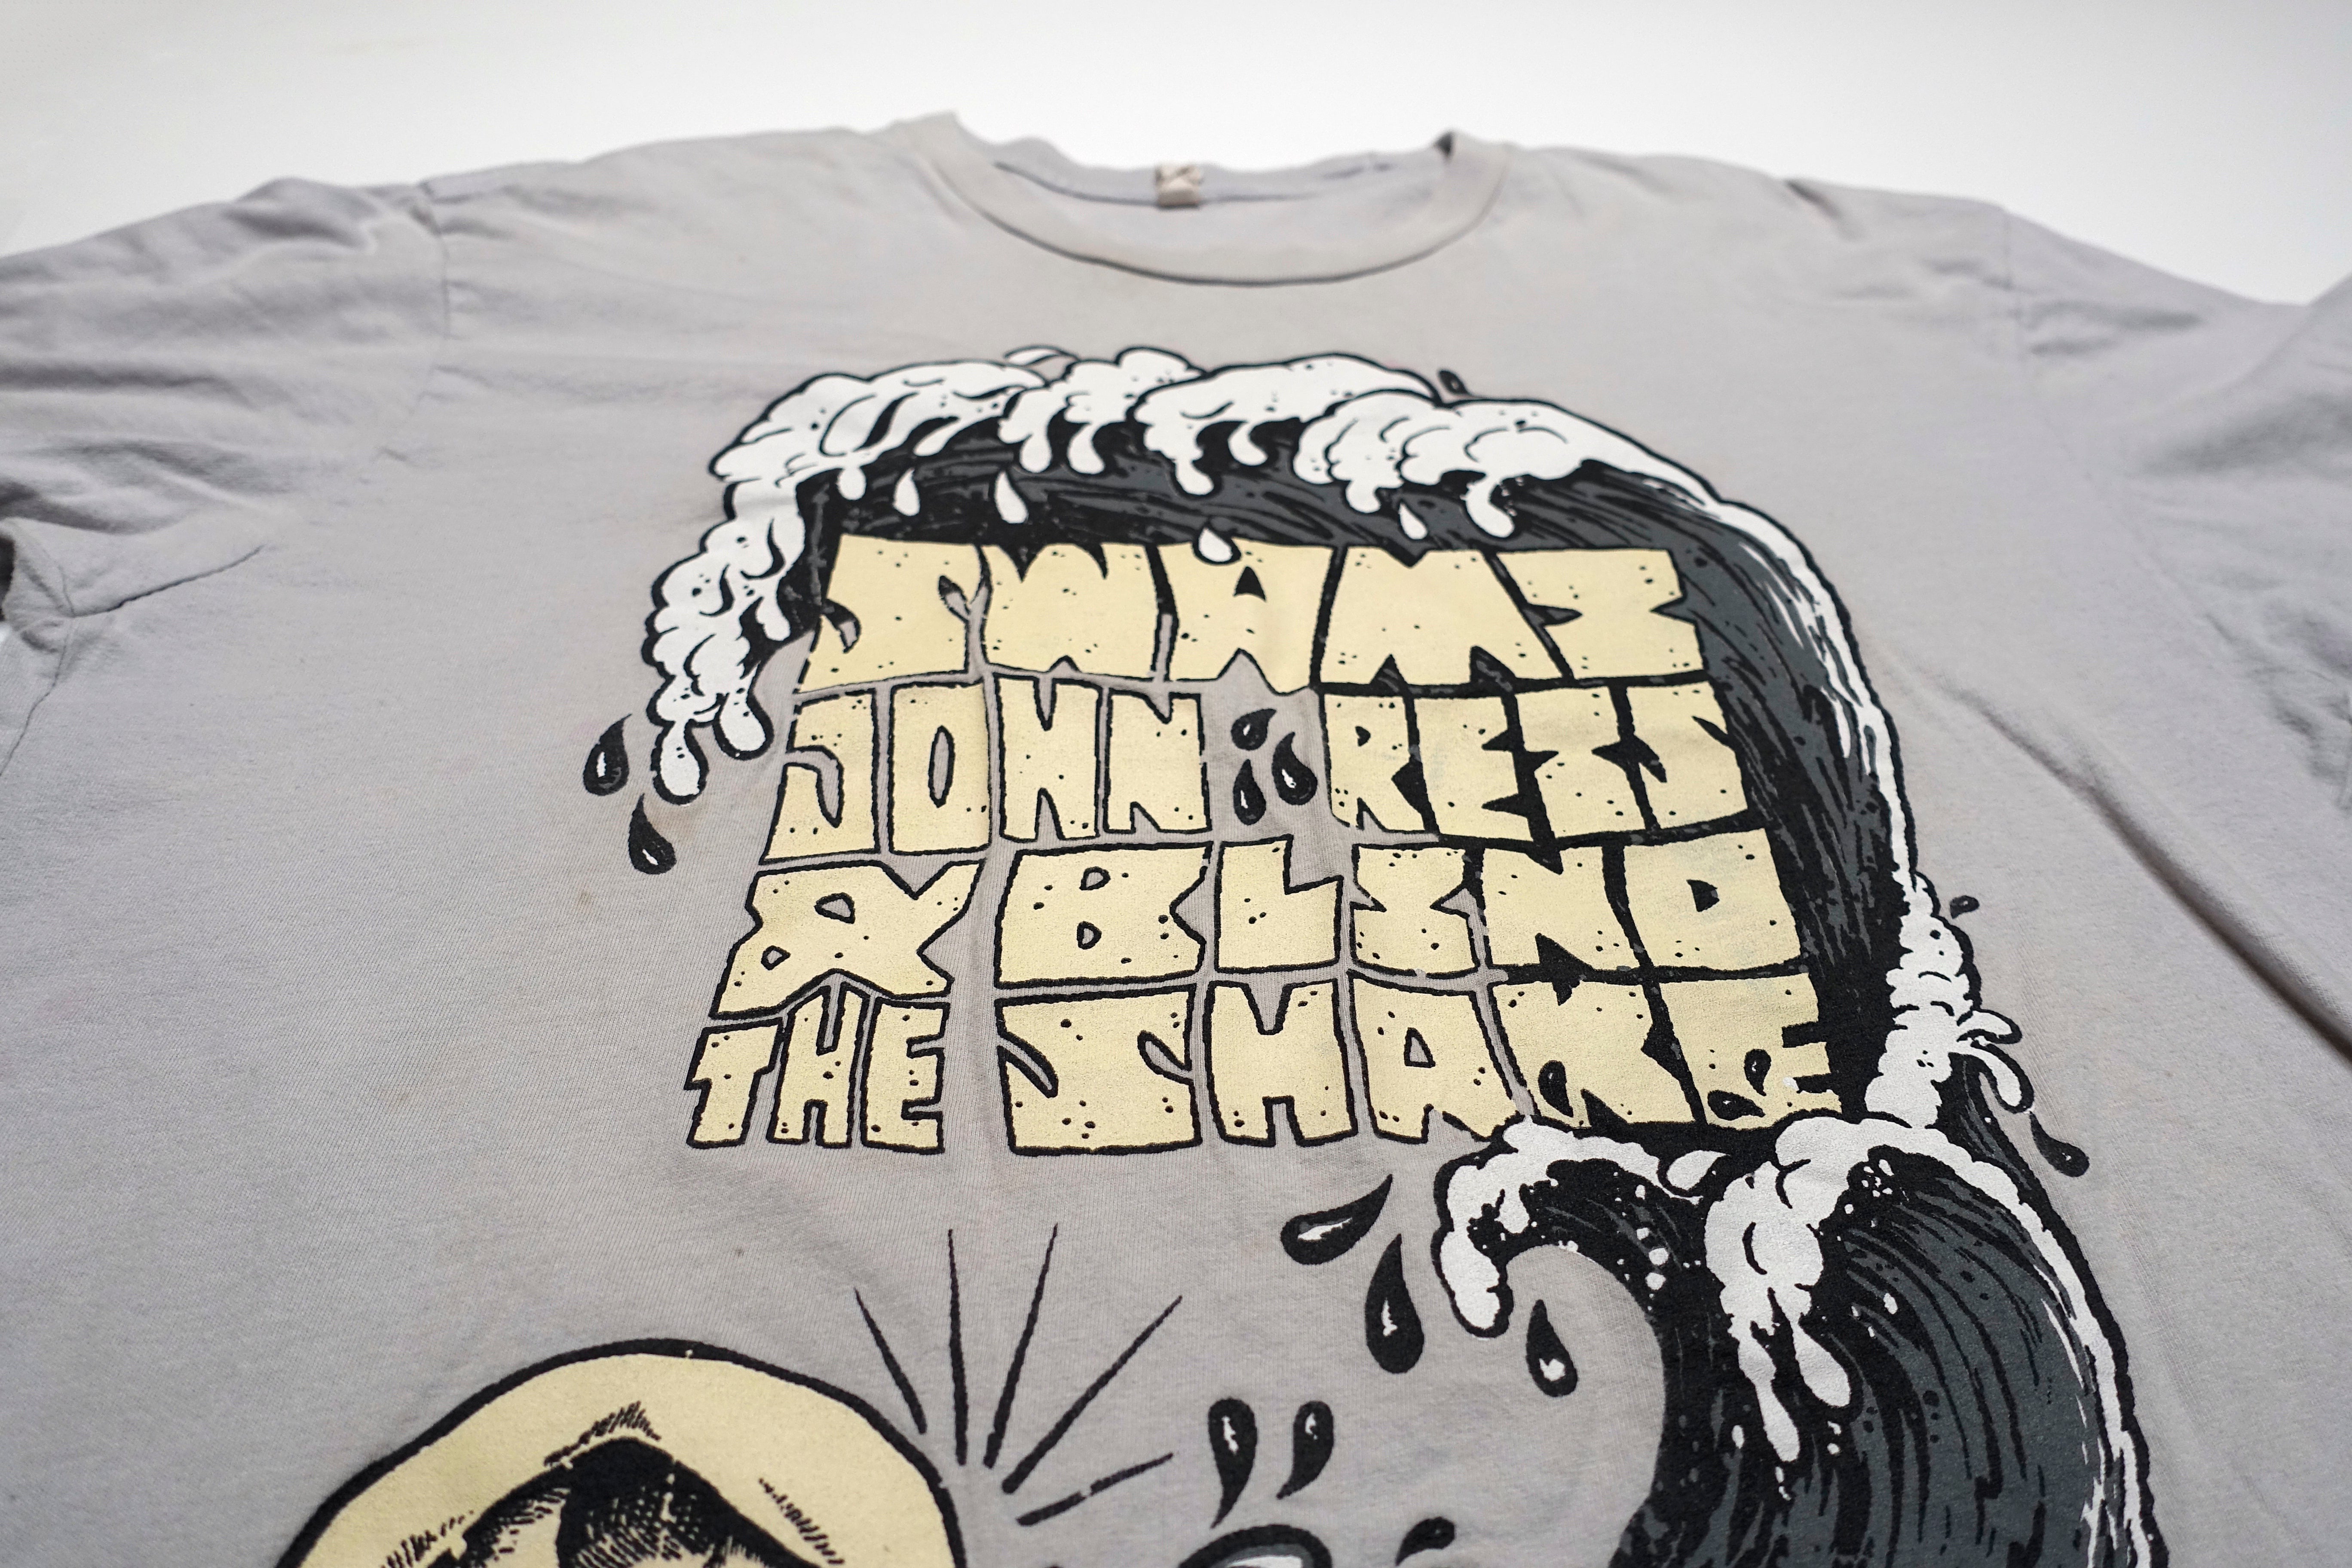 Swami John Reis & The Blind Shake - Modern Surf Classics Tour Shirt Size Medium